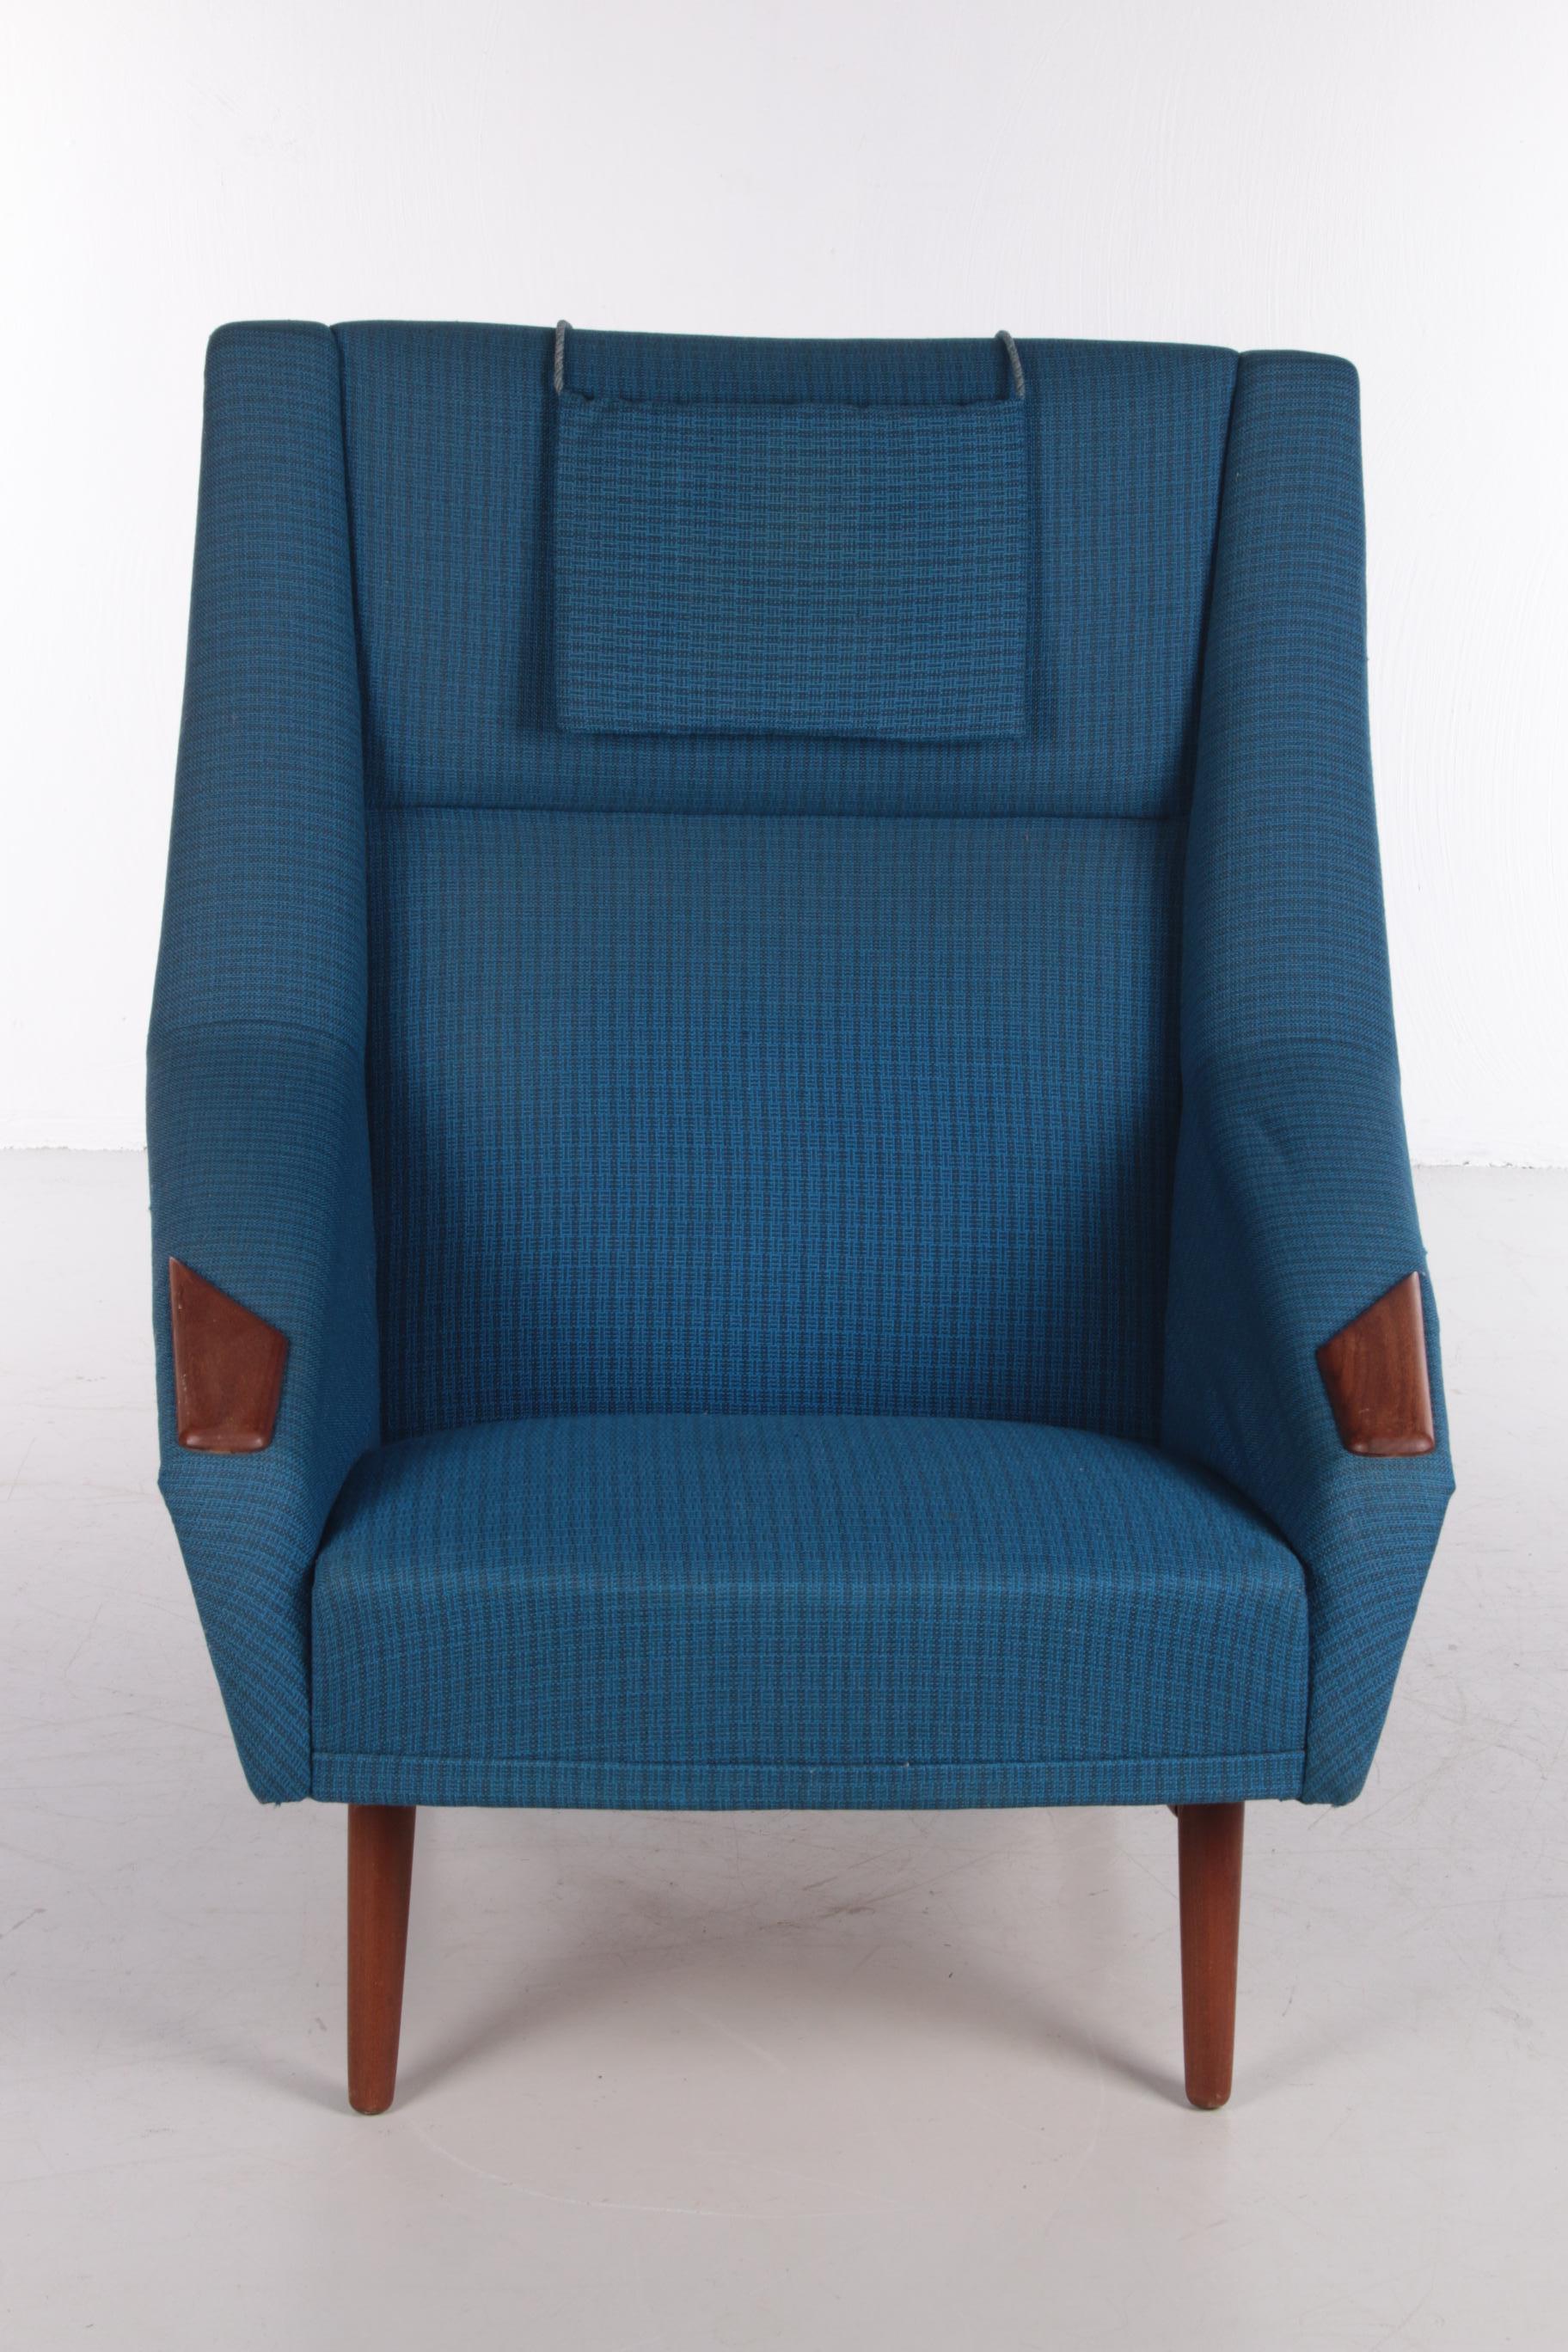 Relaxing Chair Folke Ohlsson Made by Fritz Hansen 3